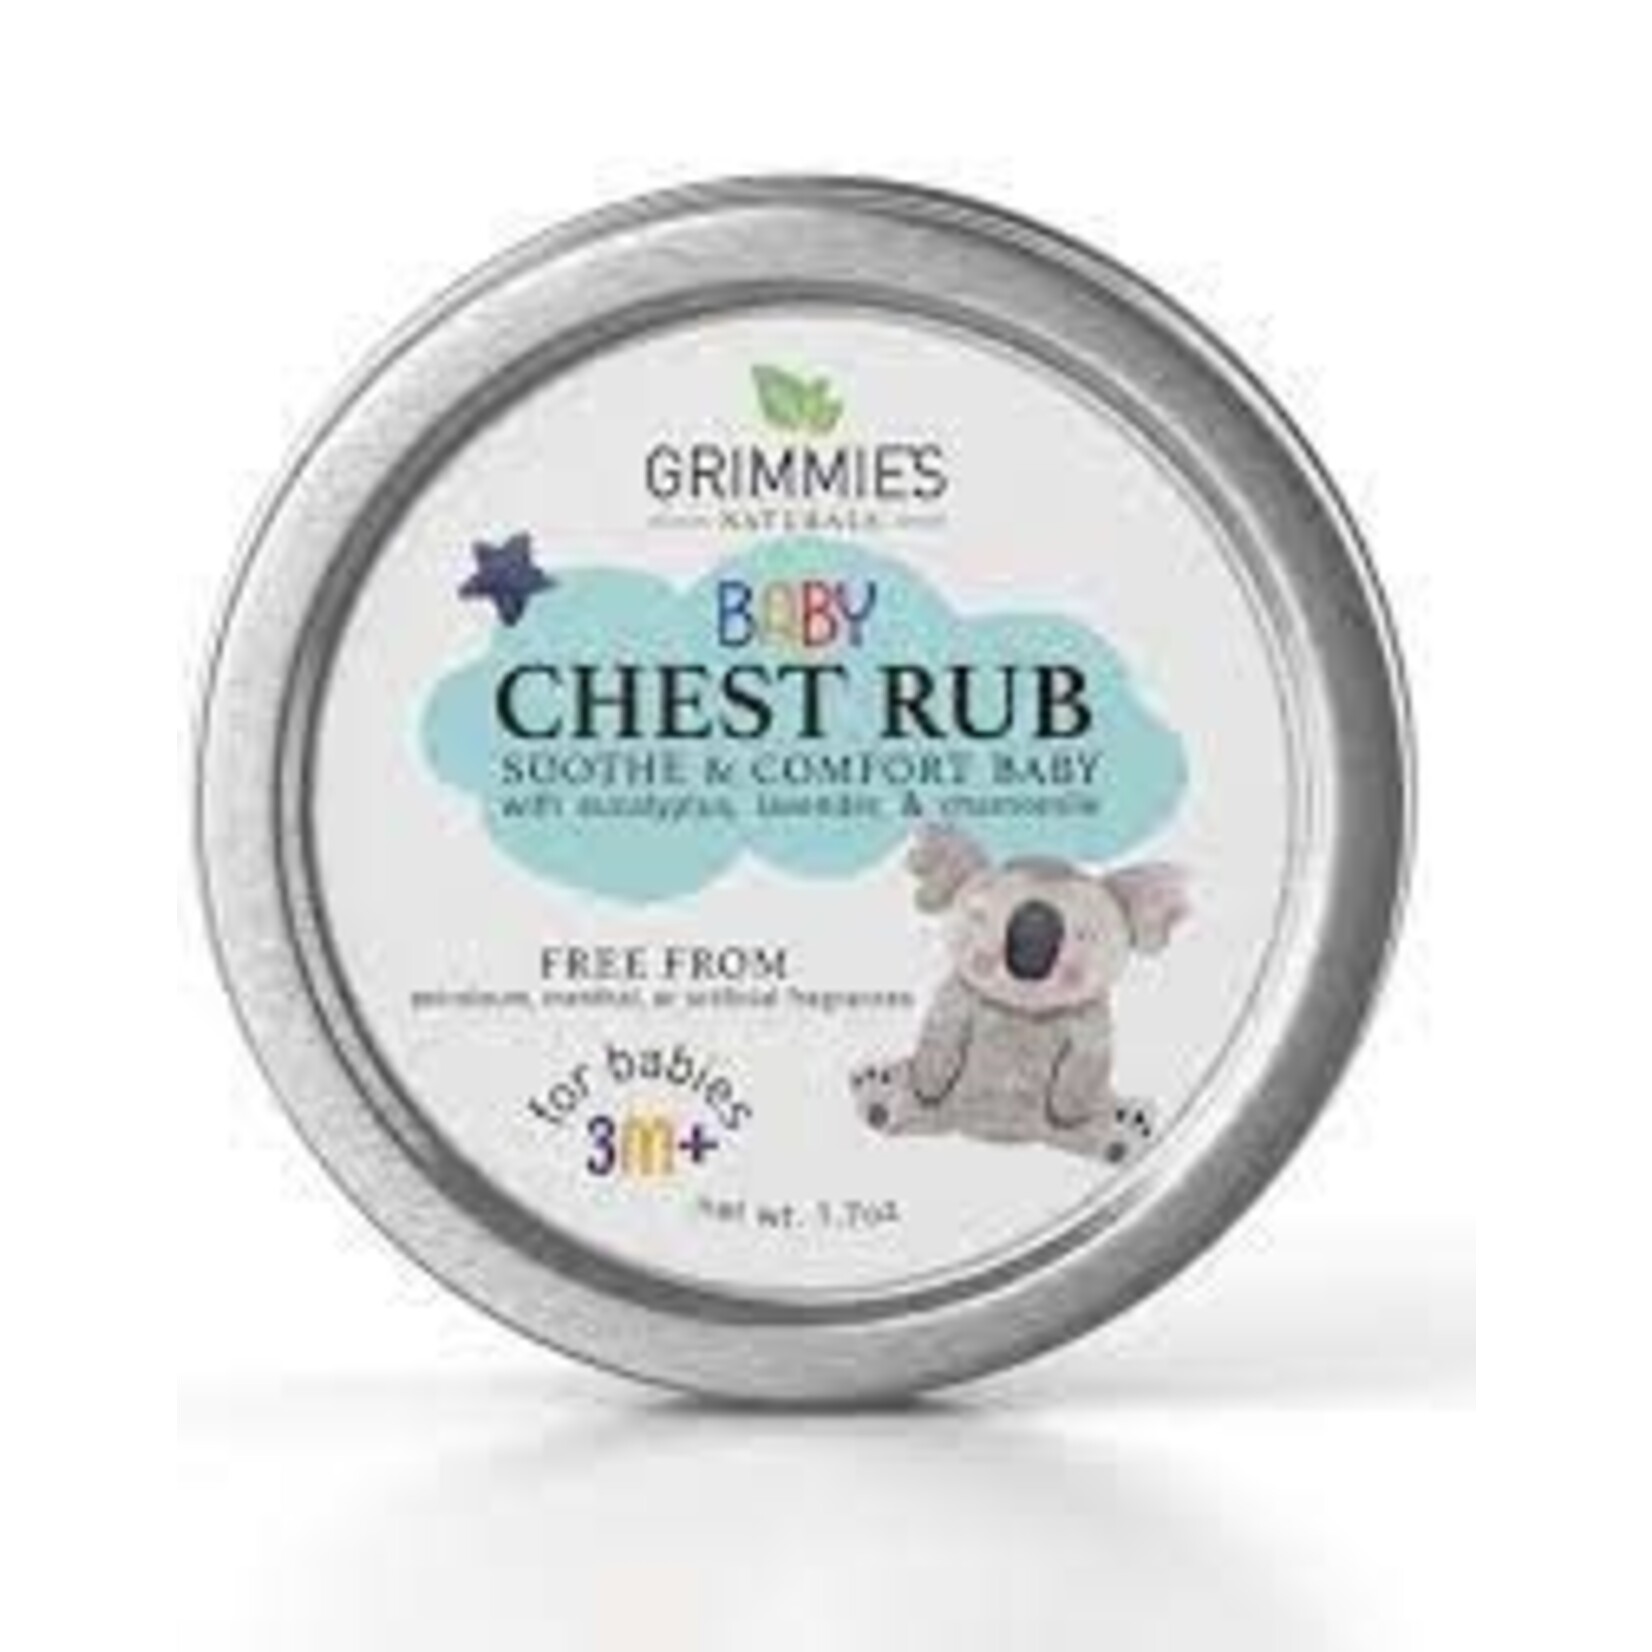 Grimmies Naturals Baby Chest Rub (3m+)